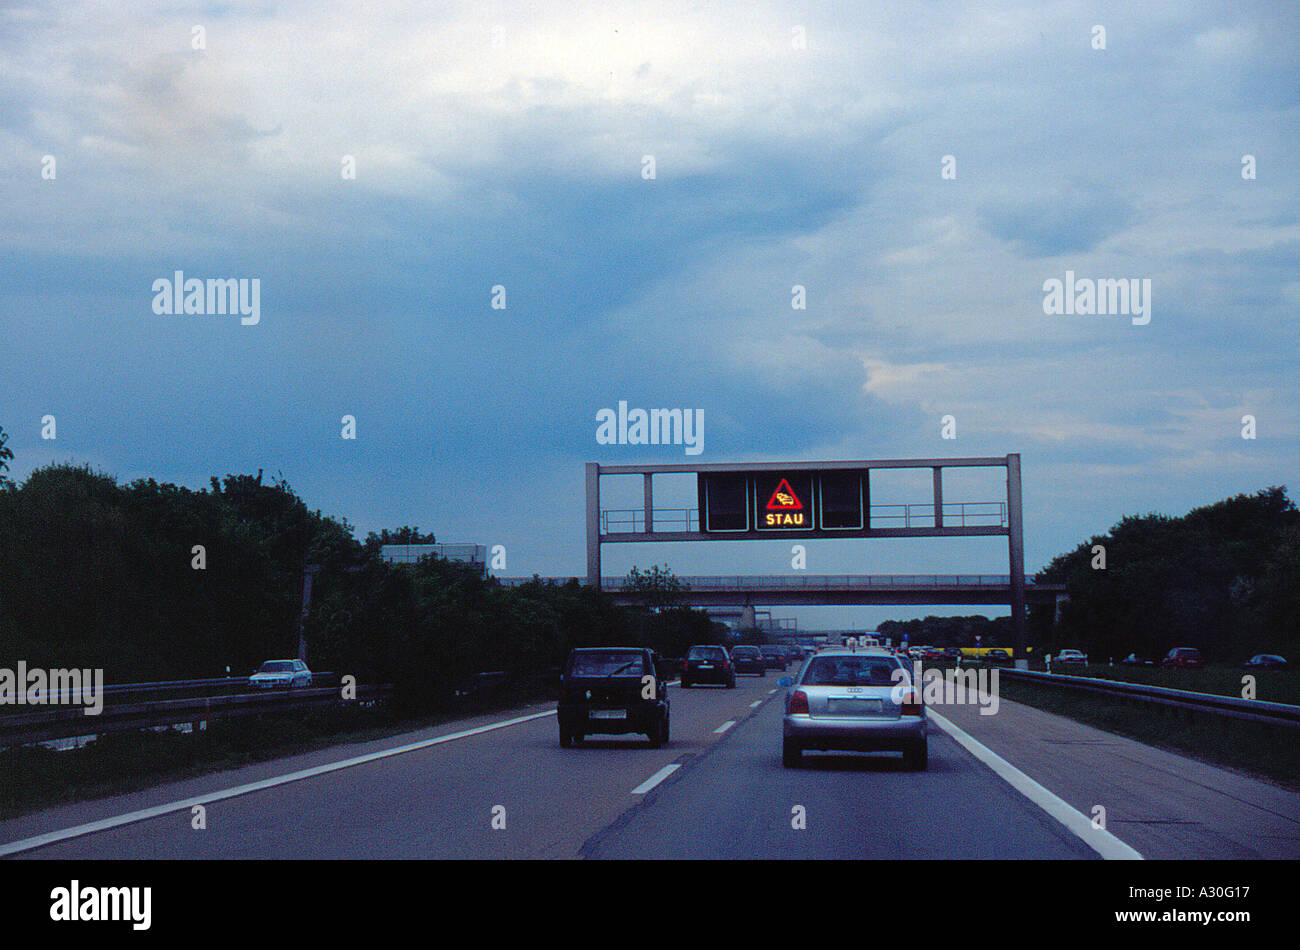 Autobahn traffic with sing for 'Stau Verkehrsleitsystem' (jam, traffic control), Bavraia, Germany,Europe. Photo by Willy Matheisl Stock Photo